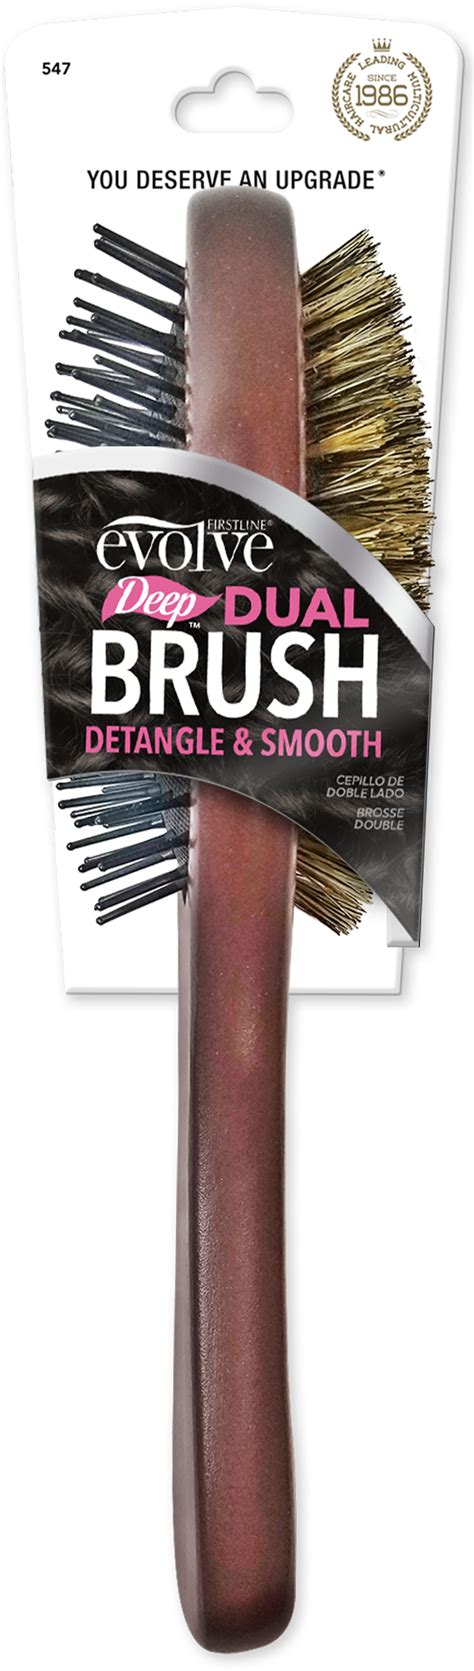 Evolve® Deep Dual Detangle And Smooth Brush 547 Firstline Brands